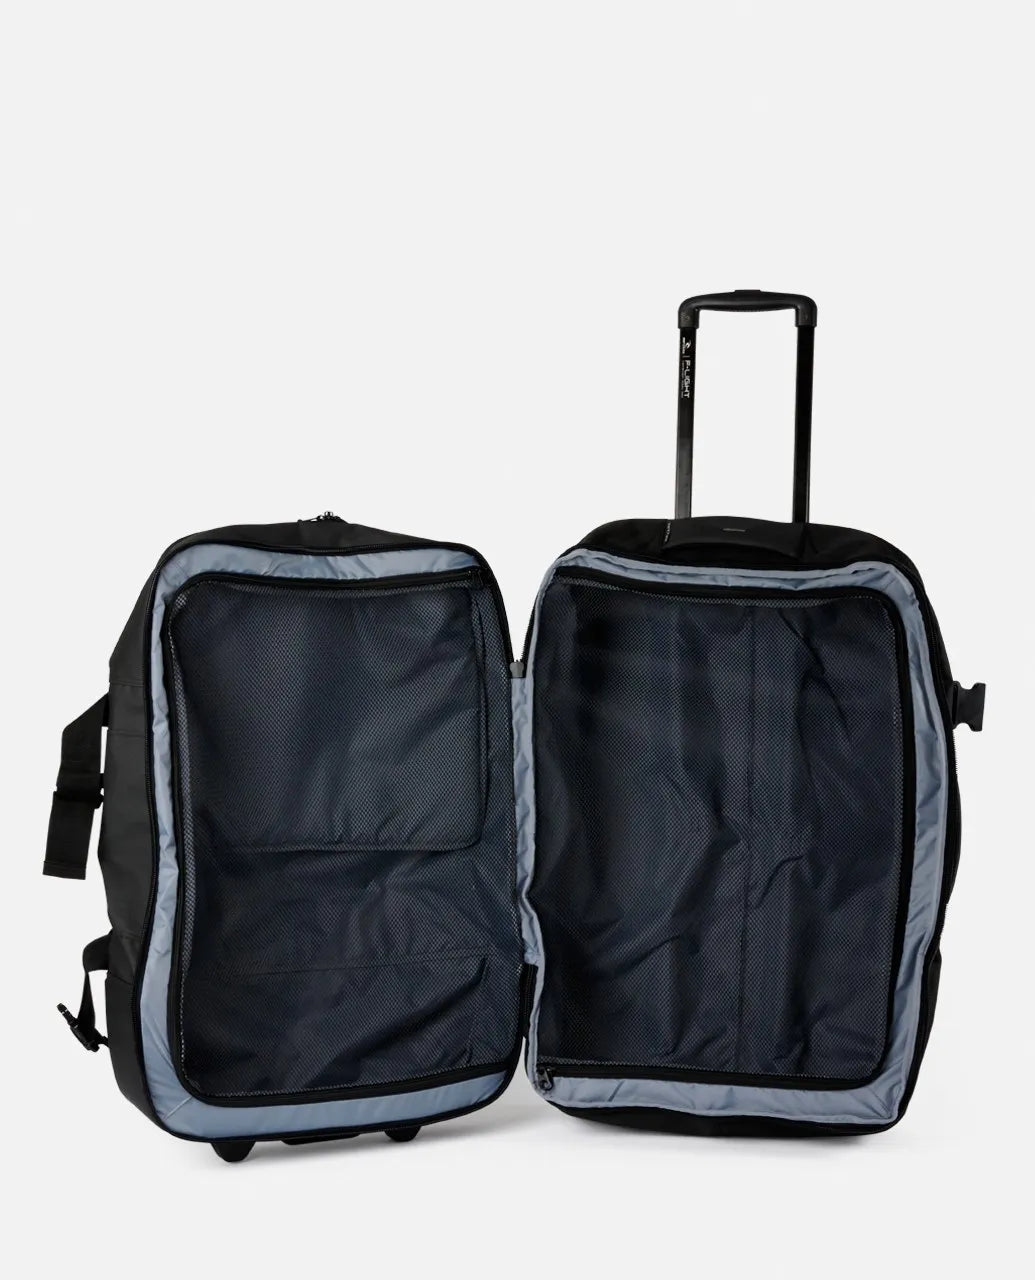 Ripcurl Flight Global 110L Wheel Bag - Black Luggage